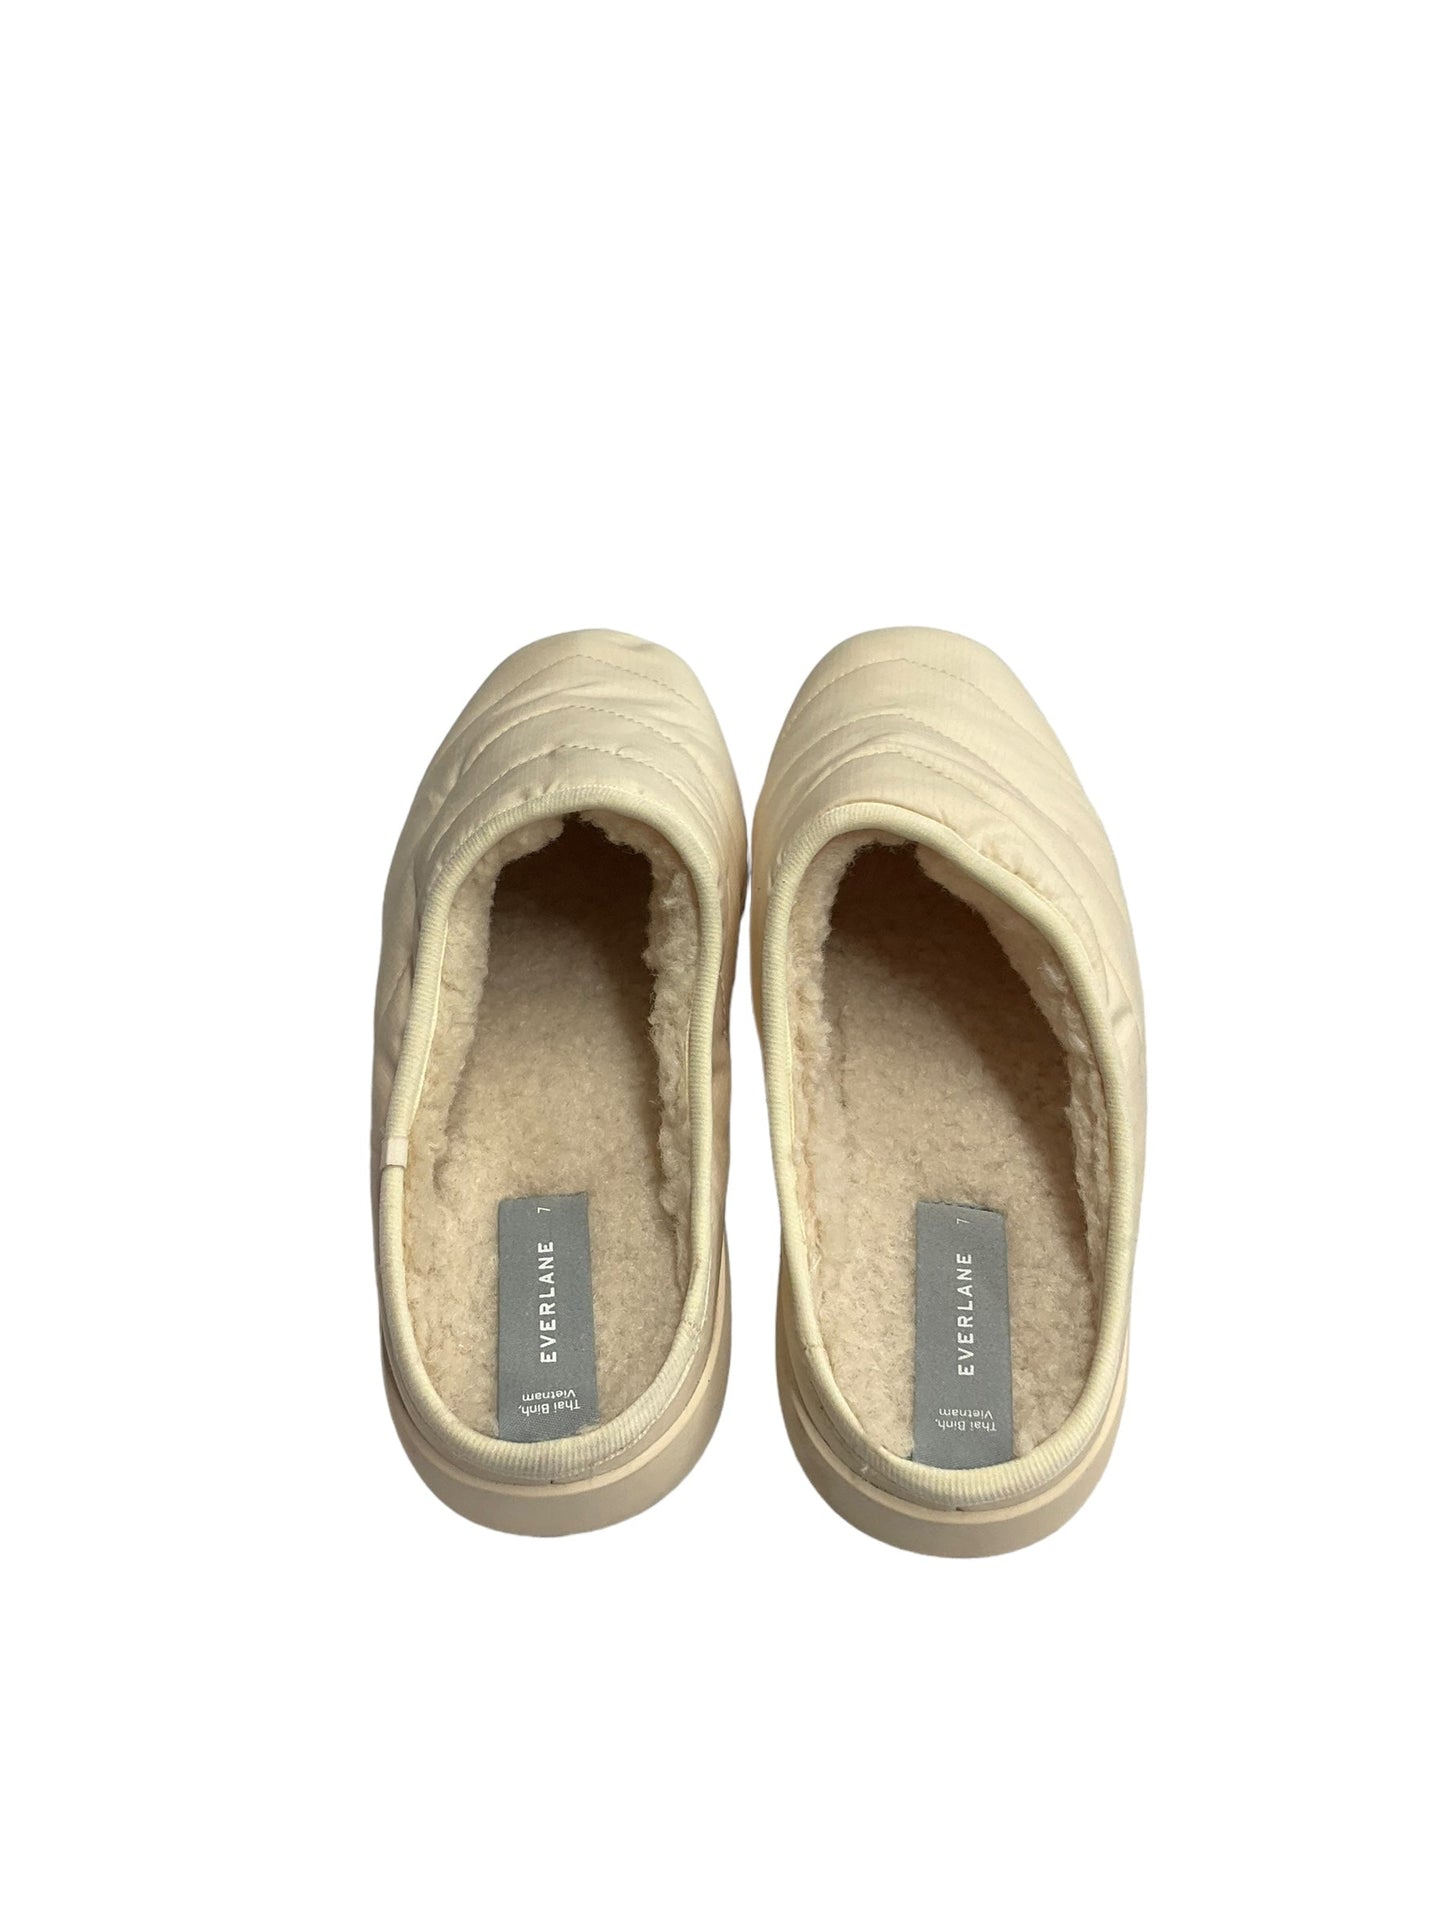 Cream Slippers Everlane, Size 7